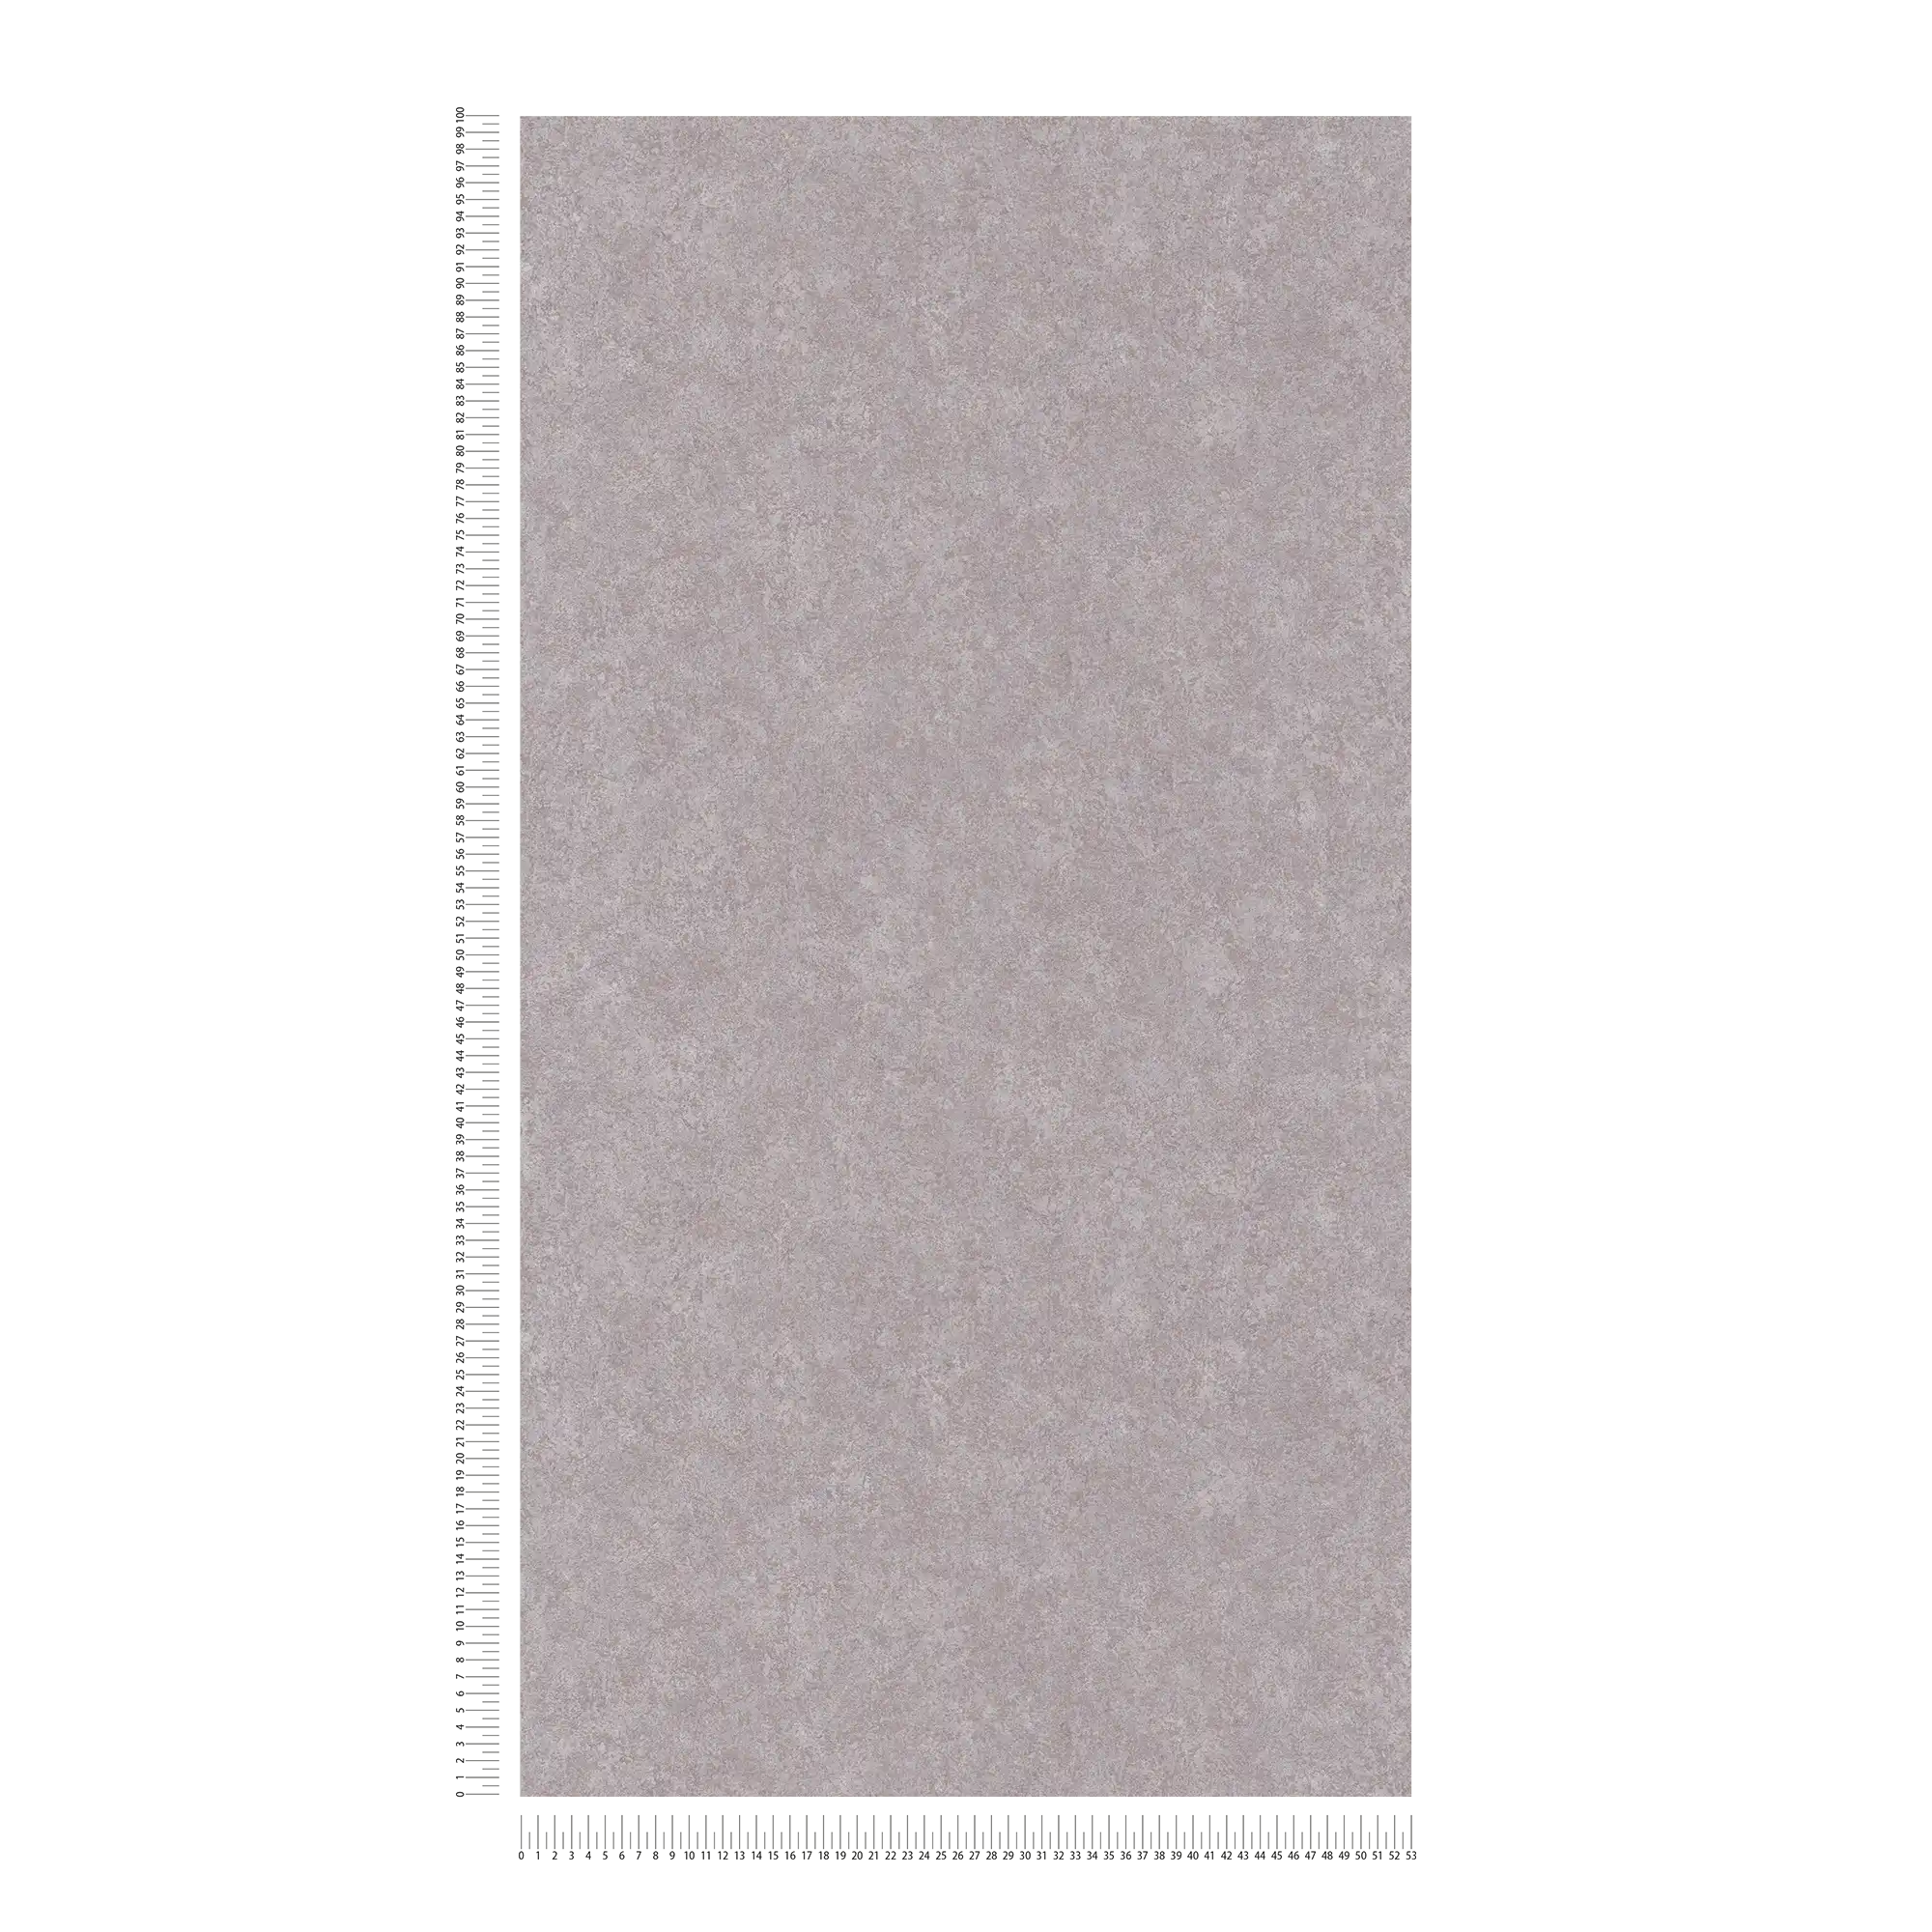             Neutraal pleisterachtig behang met mat oppervlak - grijs
        